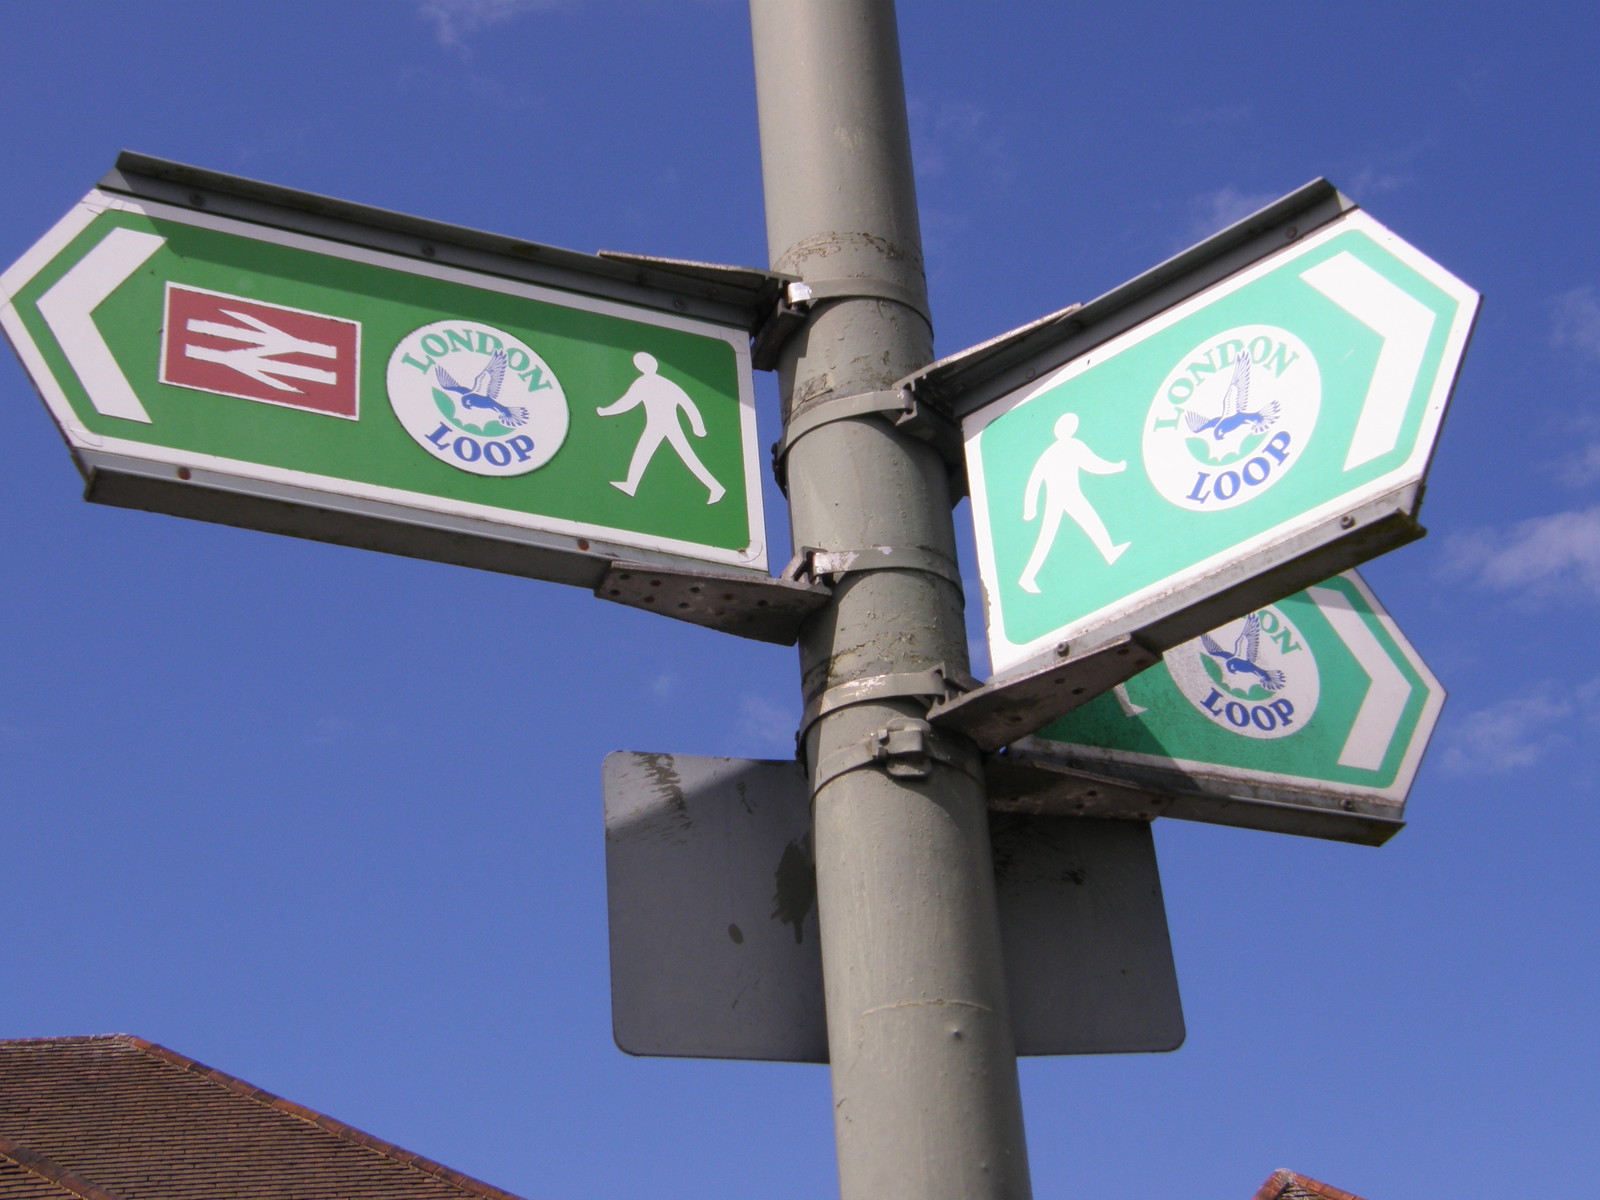 A London Loop sign in Barnet